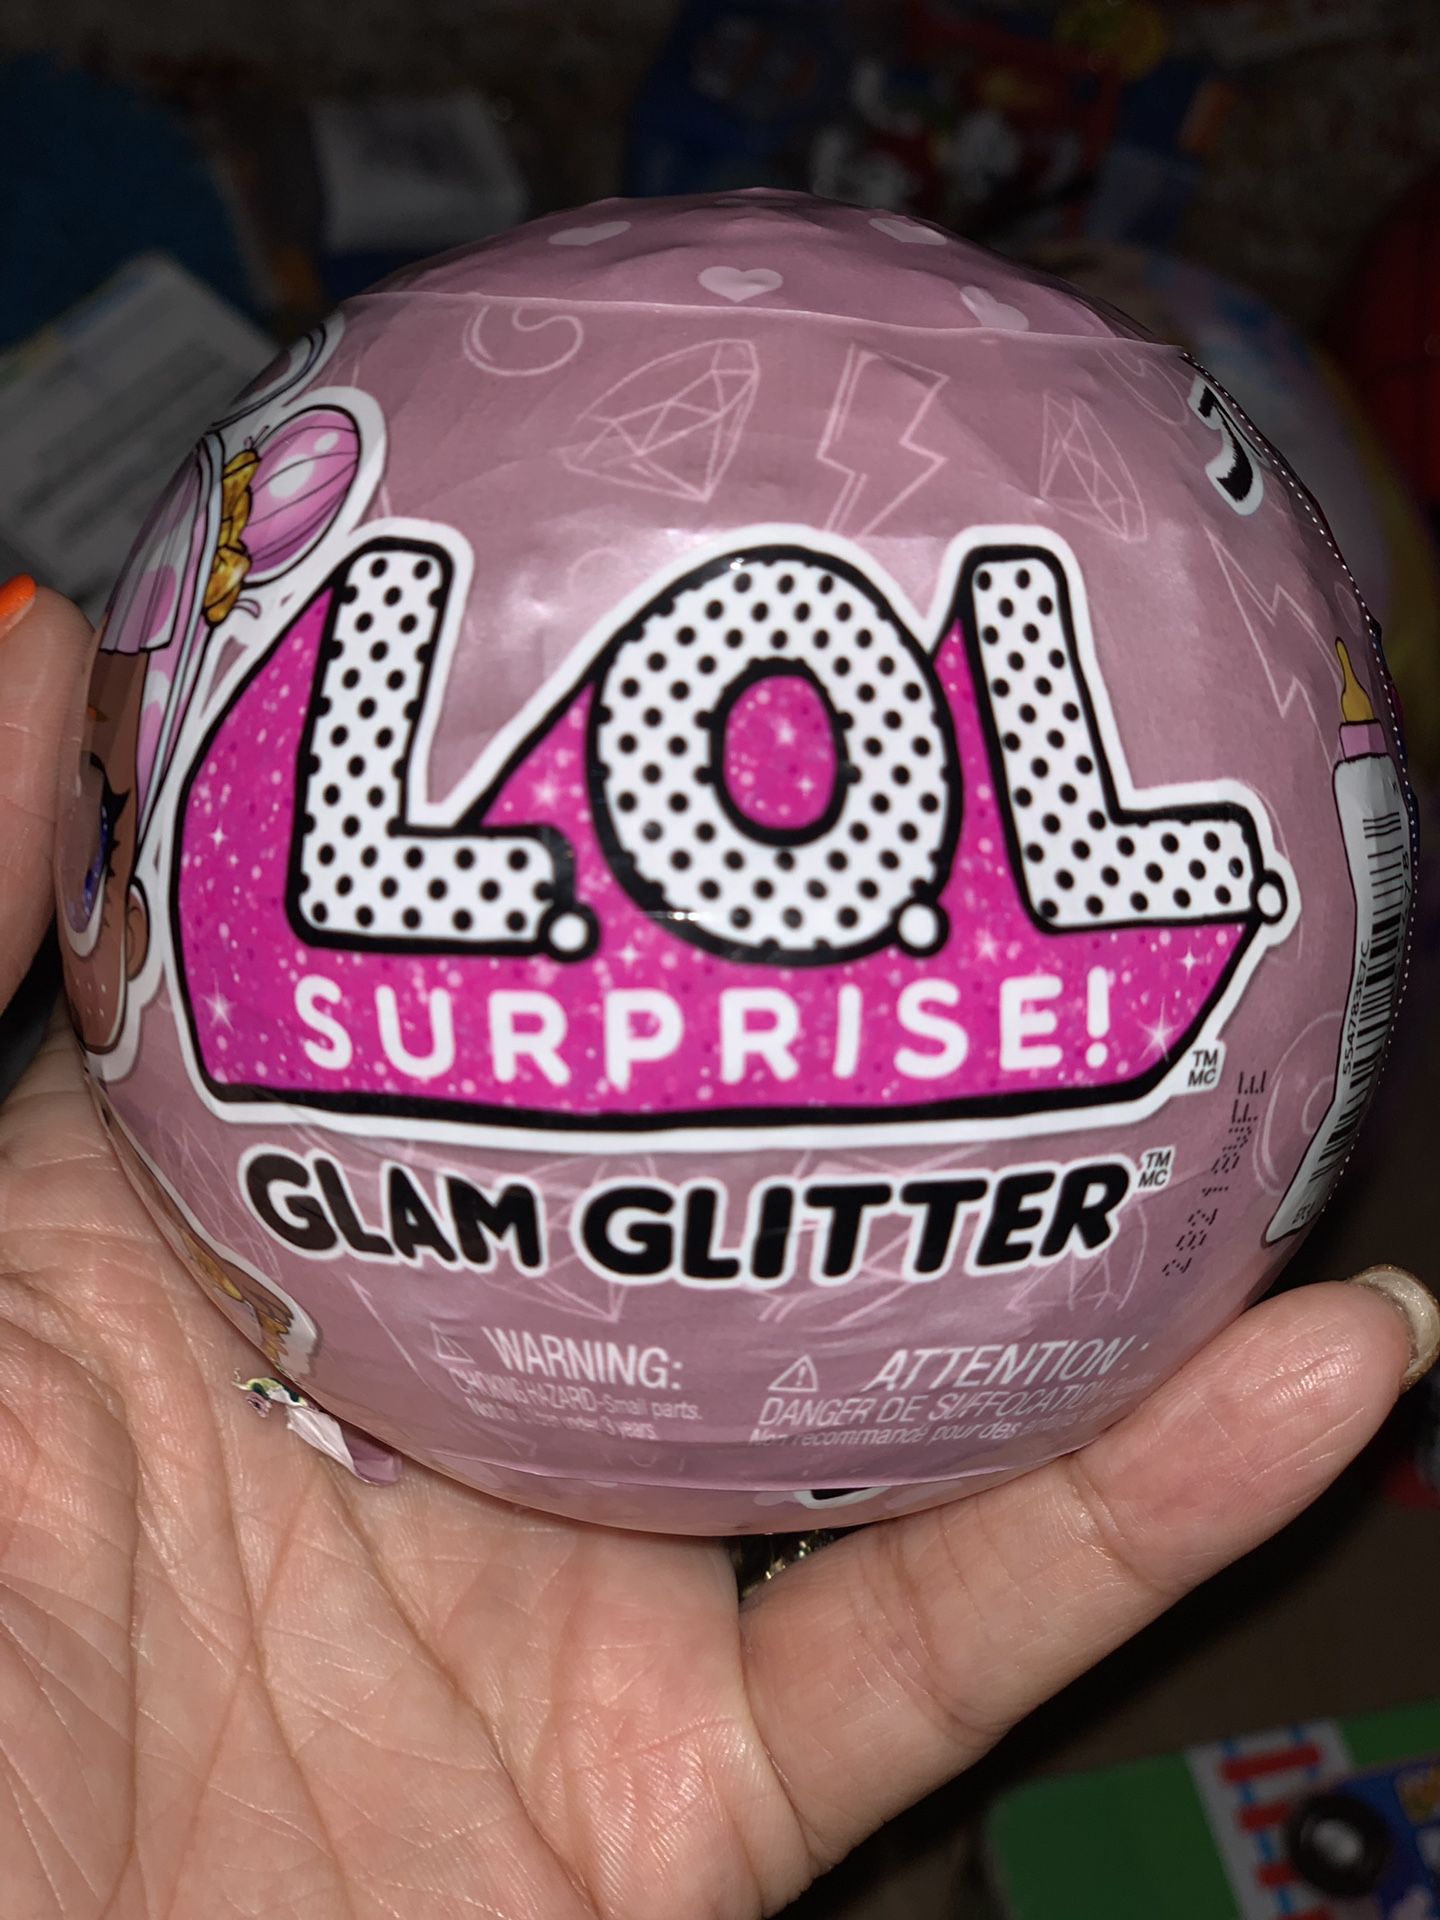 LOL Surprise glam glitter series